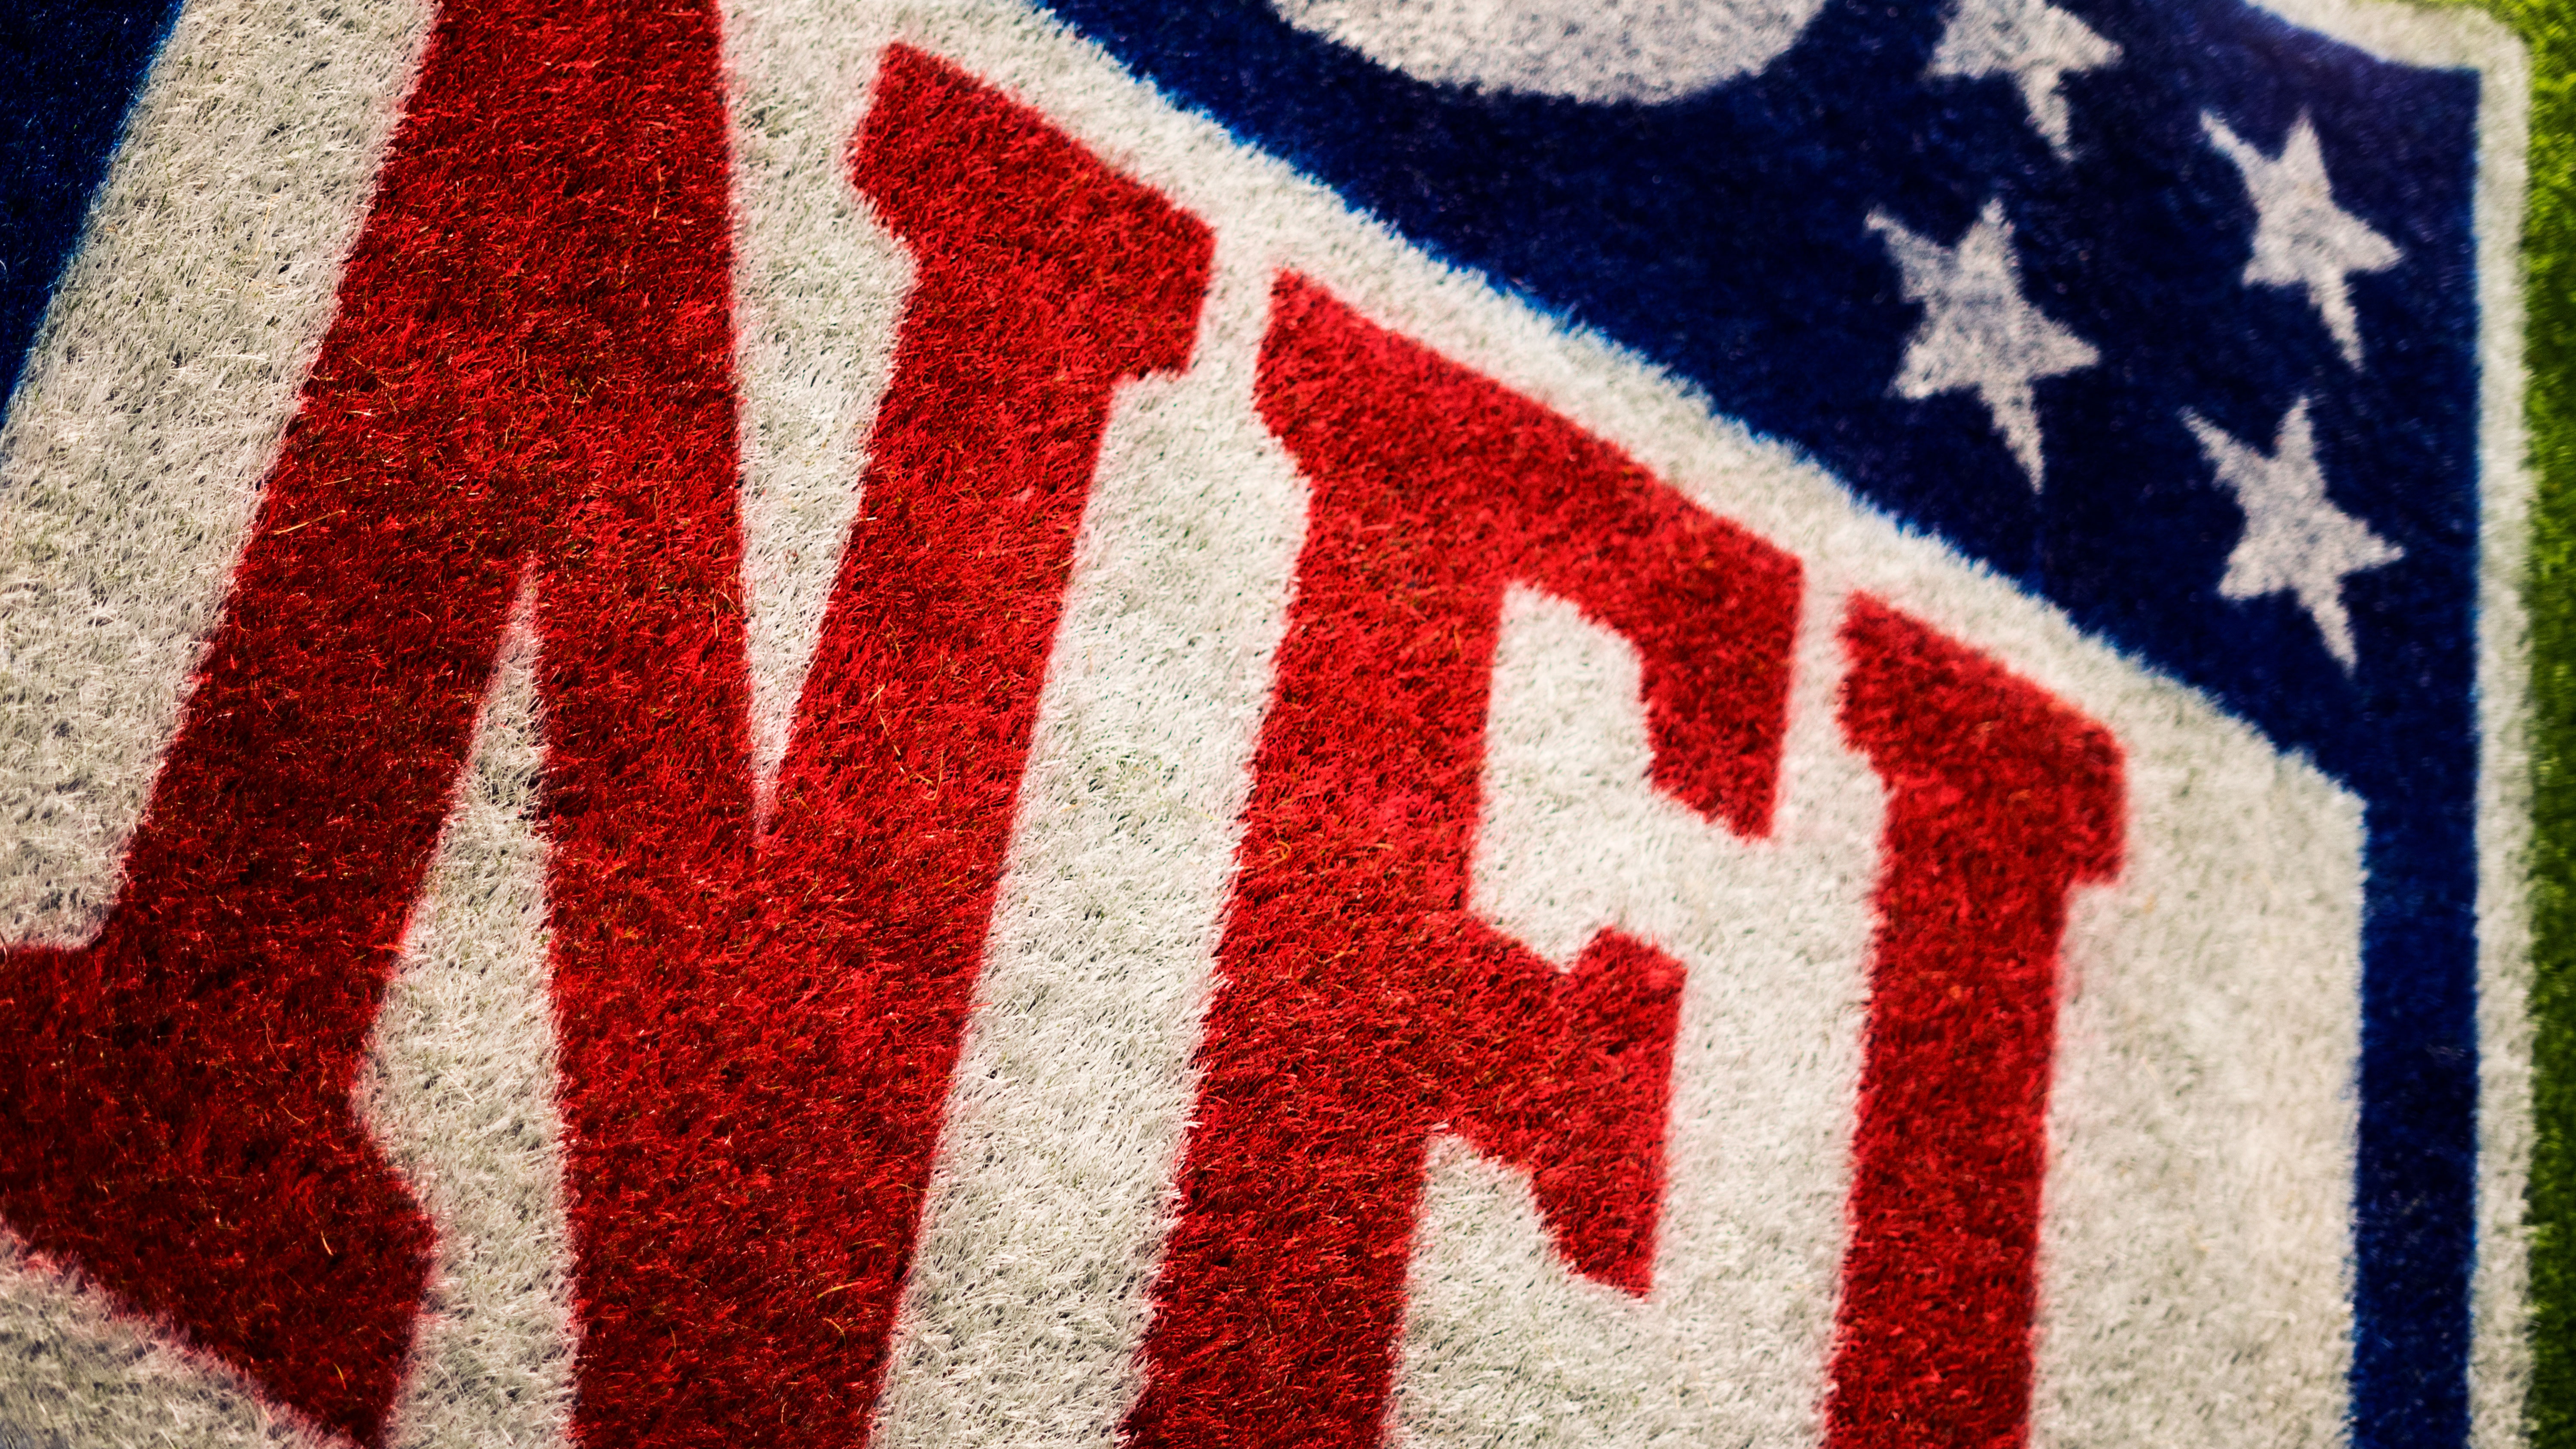 DISH to Debut ESPN Fantasy Football App on Hopper During NFL